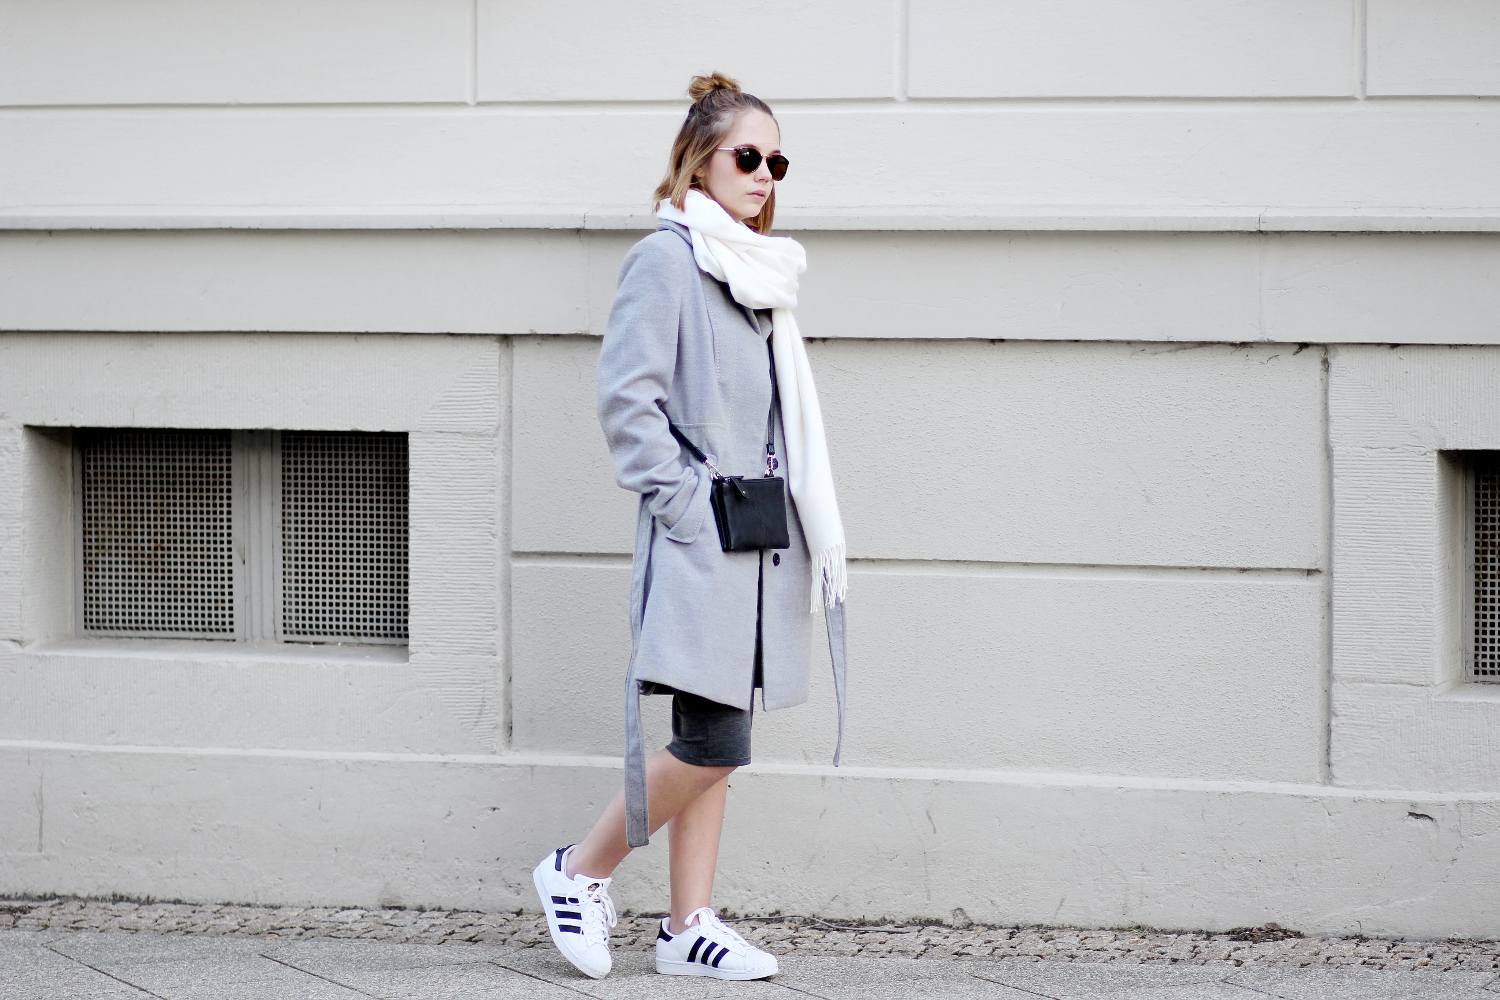 bezauberndenana-fashionblog-outfit-streetstyle-minimalistisch-midi-kleid-zara-grauer-mantel-adidas-superstars-casual